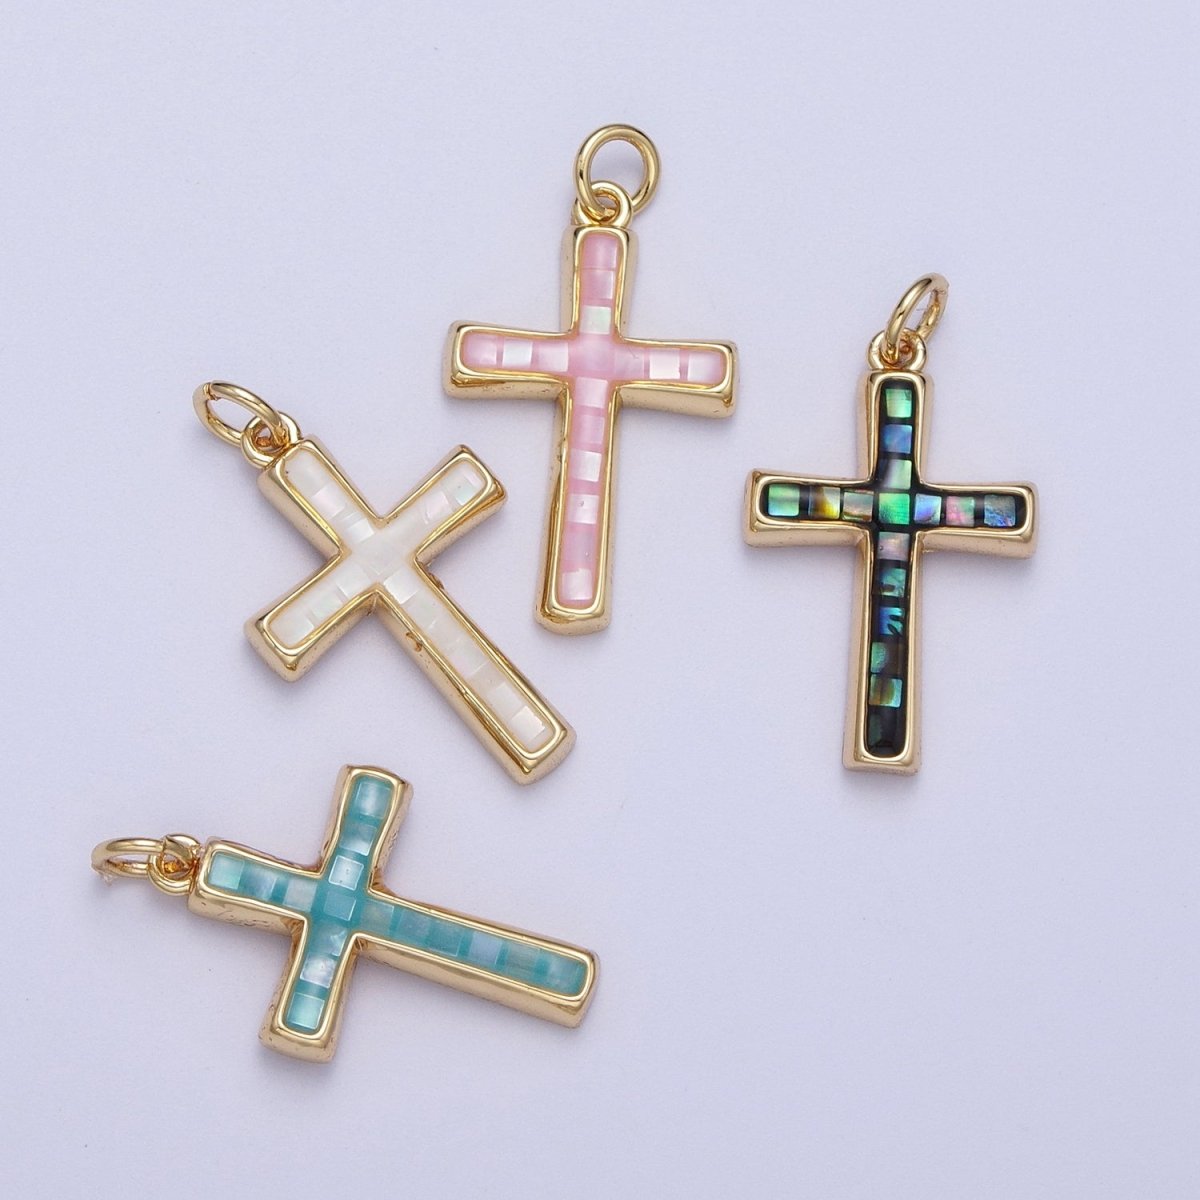 24K Gold Filled Religious Cross Black, White, Blue, Pink Shell Opal Charm | C-218 C-233 C-234 C-241 - DLUXCA